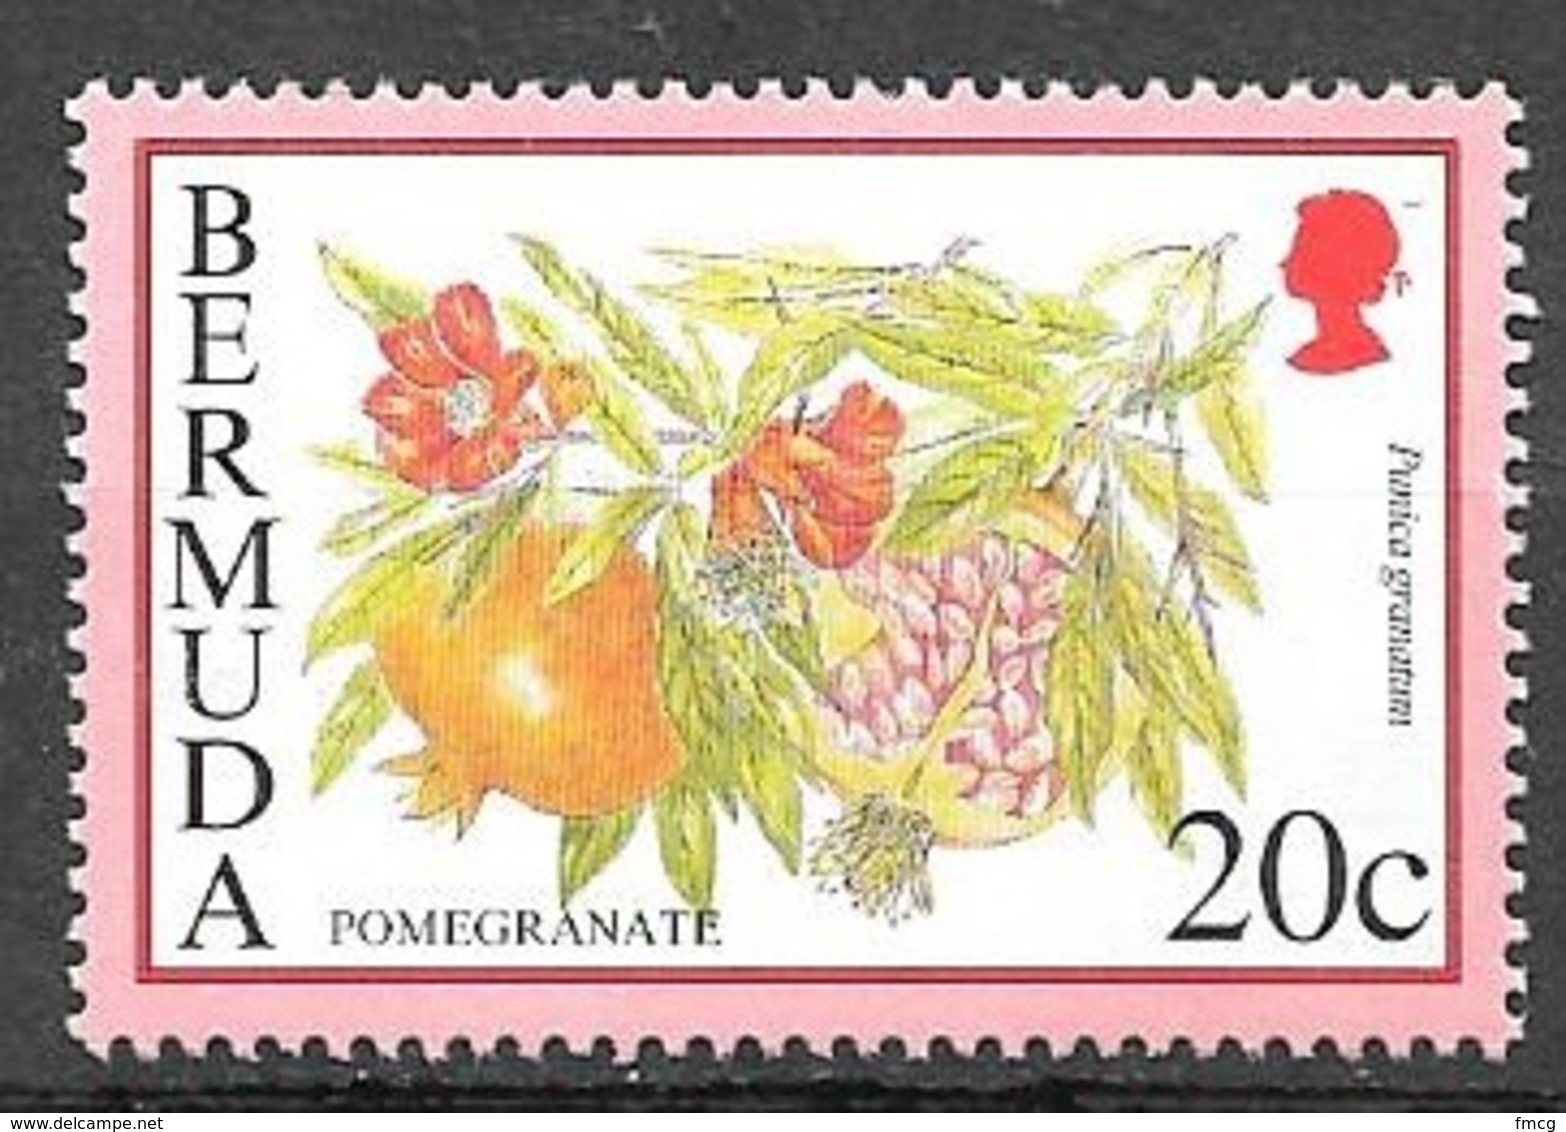 1994 20 Cents Pomegranate, Mint Never Hinged - Bermuda